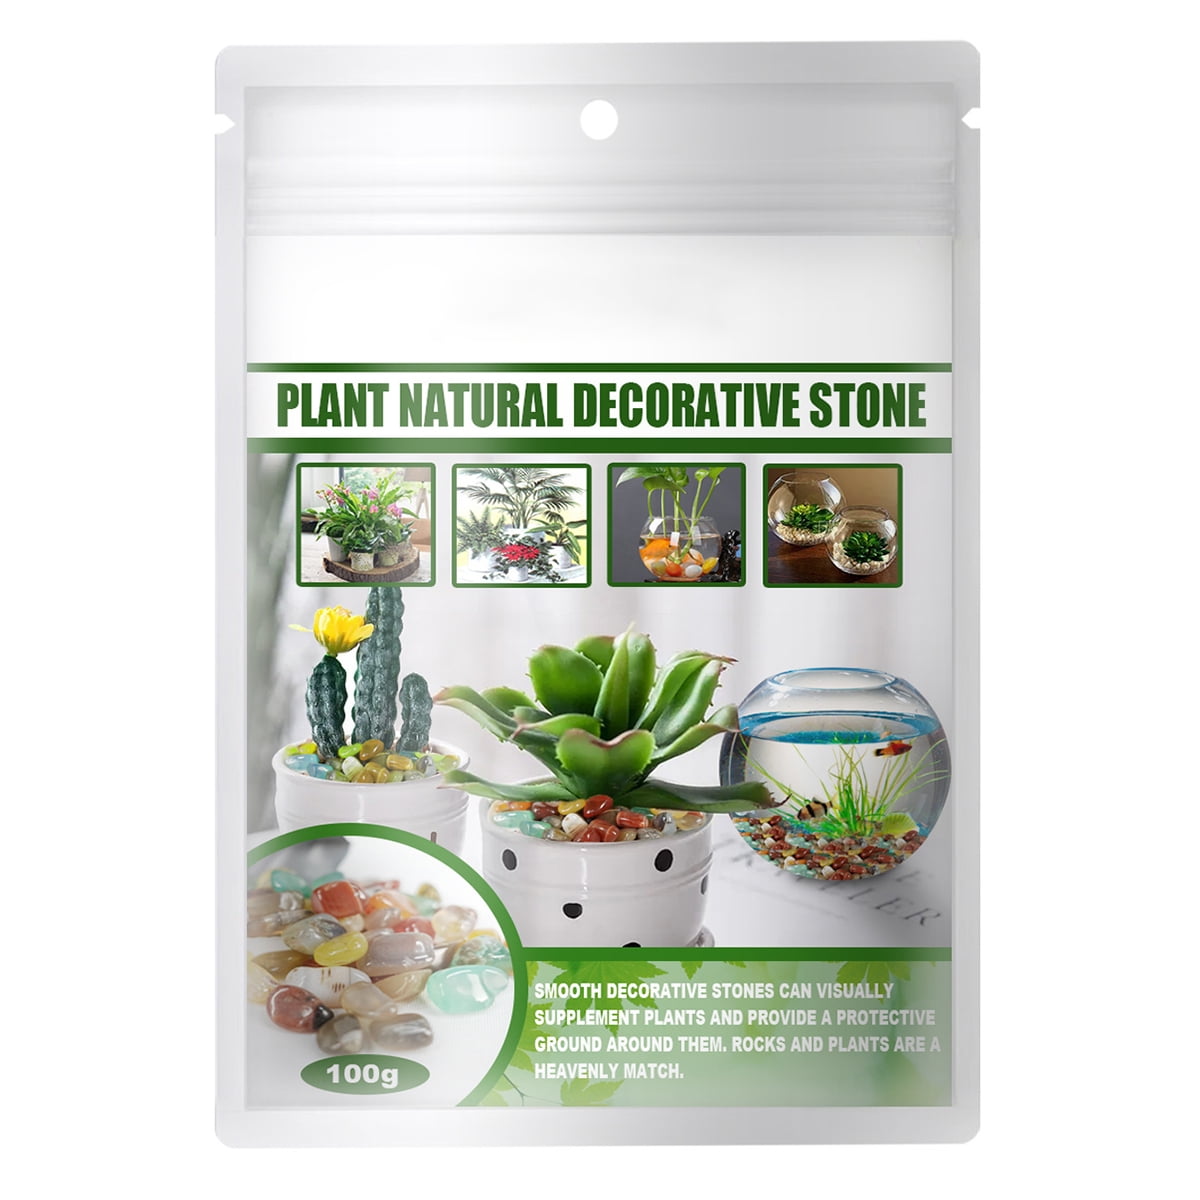 1 inch 20-30mm White Decorative Gravel Pebbles for Plants Rocks for Succulent Plants or Bonsai Garden 3lb Bulk Bag 